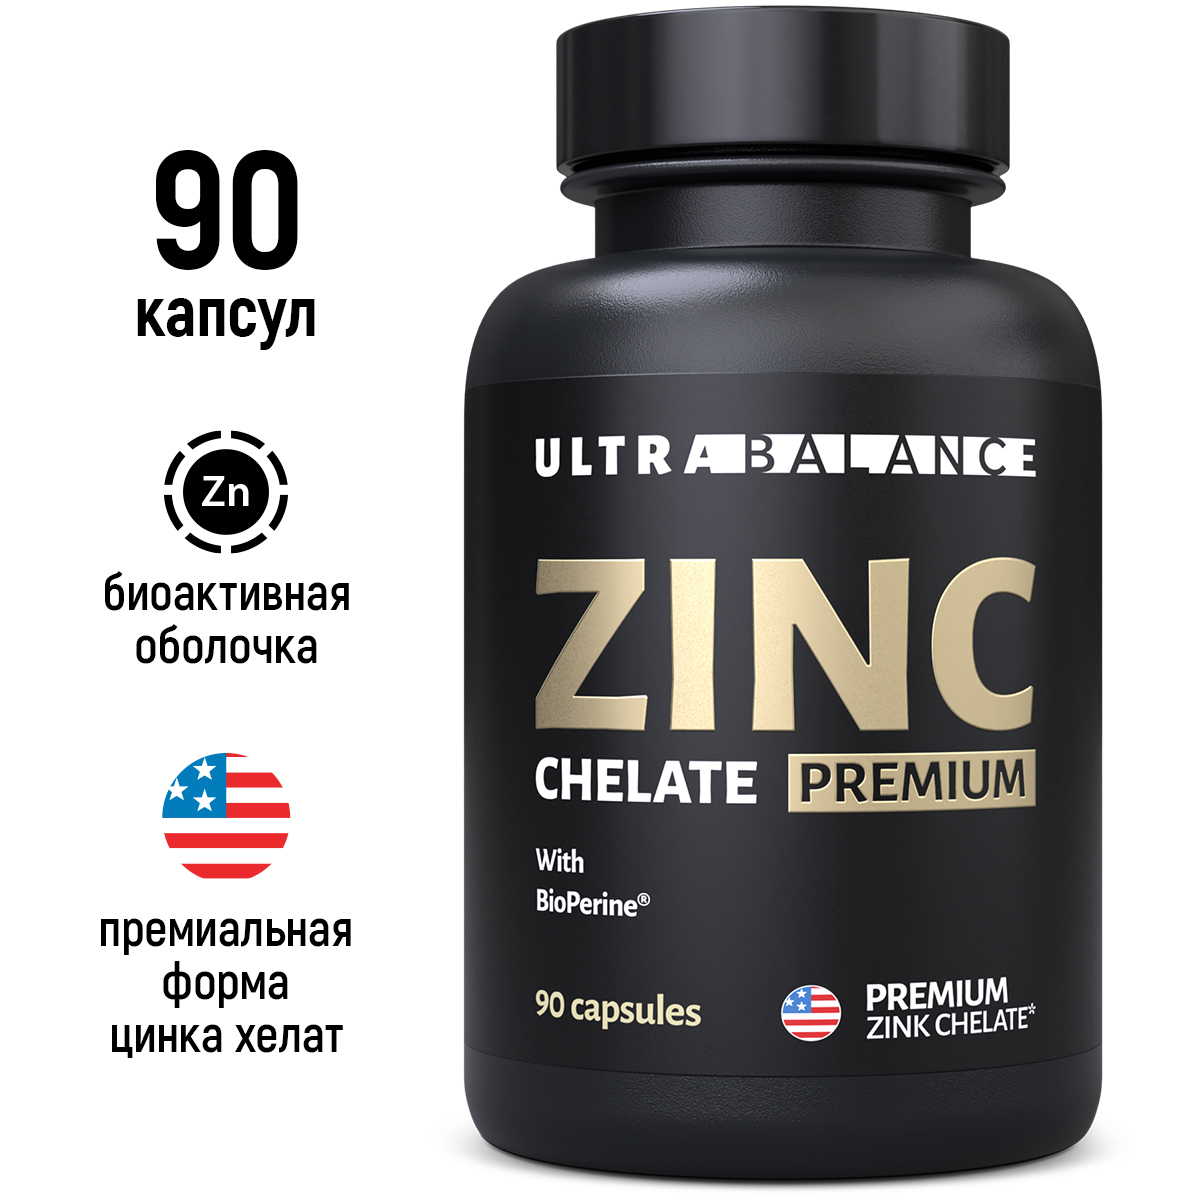 Купить Zinc Chelated Premium With BioPerine, Цинк хелат Премиум с пиперином ULTRABALANCE Zinc Chelated Premium капсулы 90 шт.